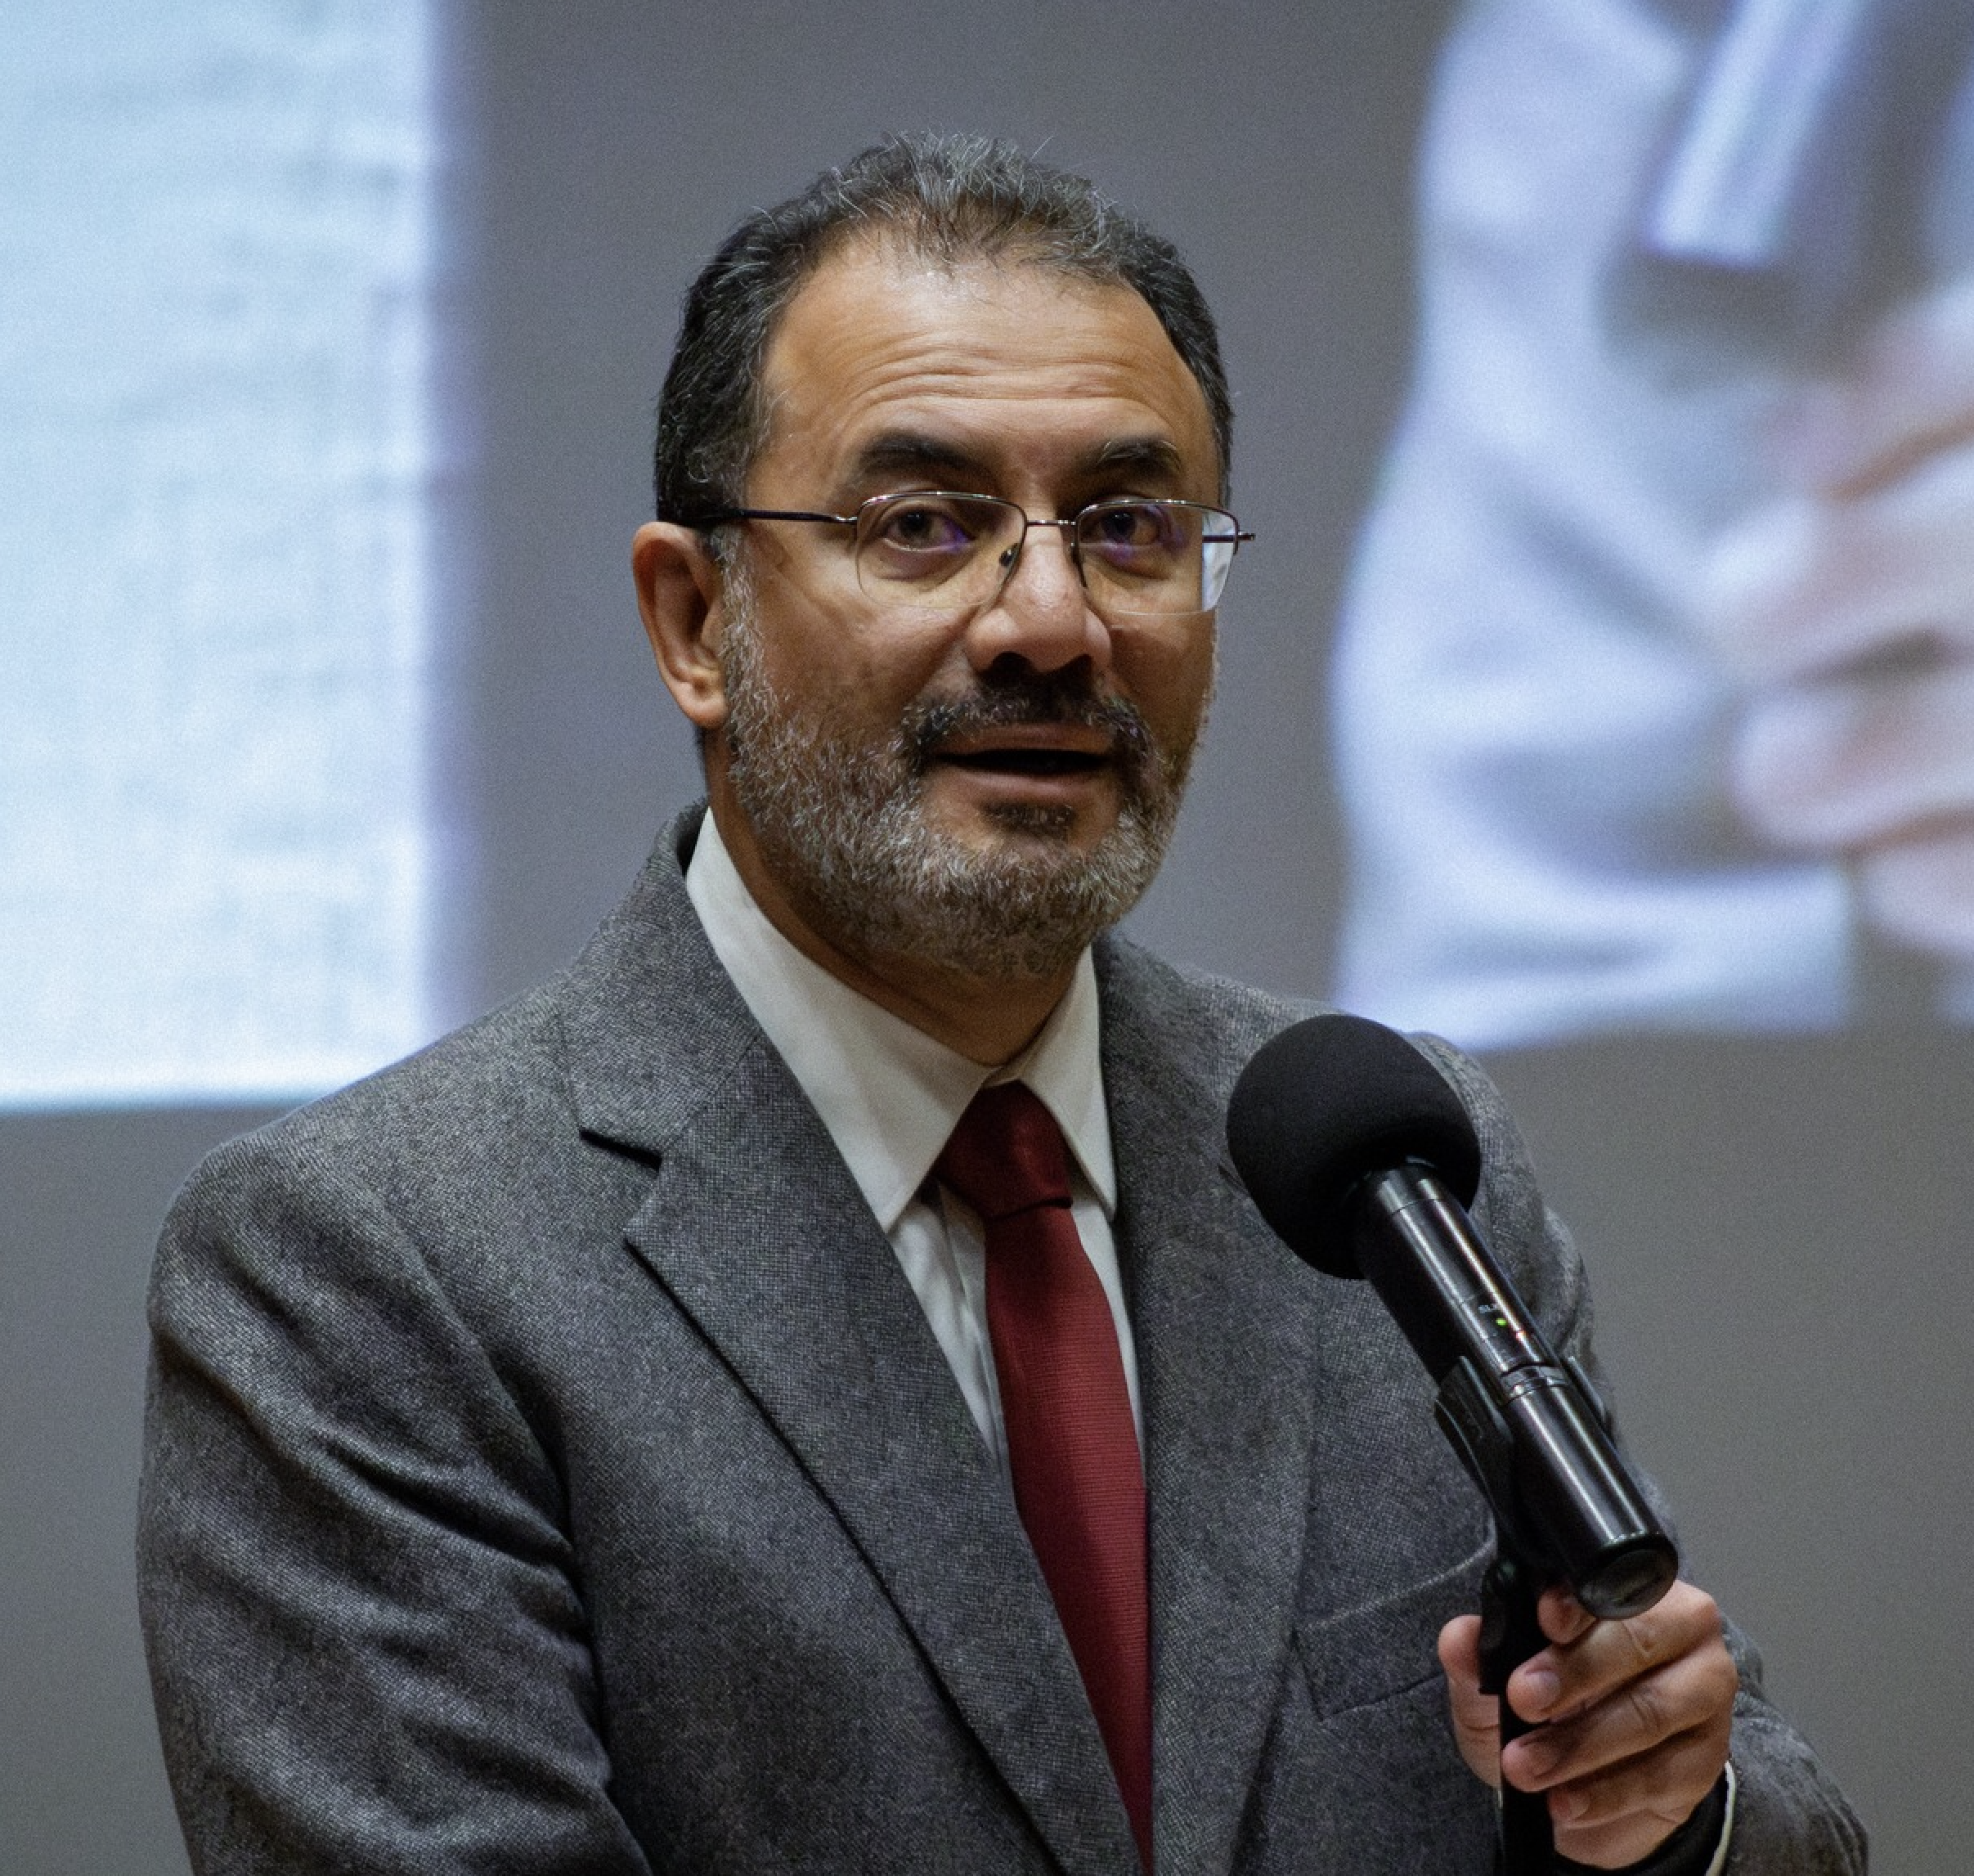 Dr. Dante Ariel Ayala Ortiz